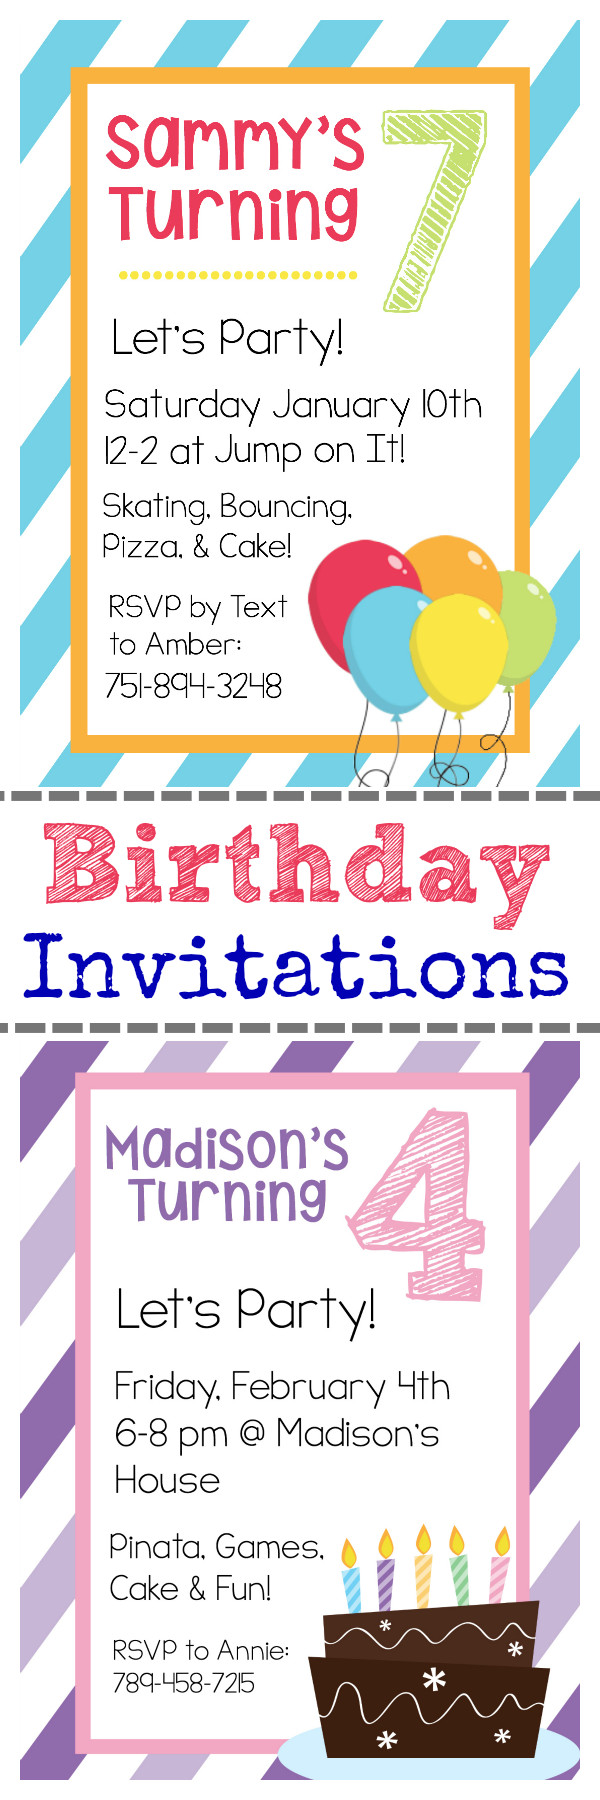 Printed Birthday Invitations
 Free Printable Birthday Invitation Templates